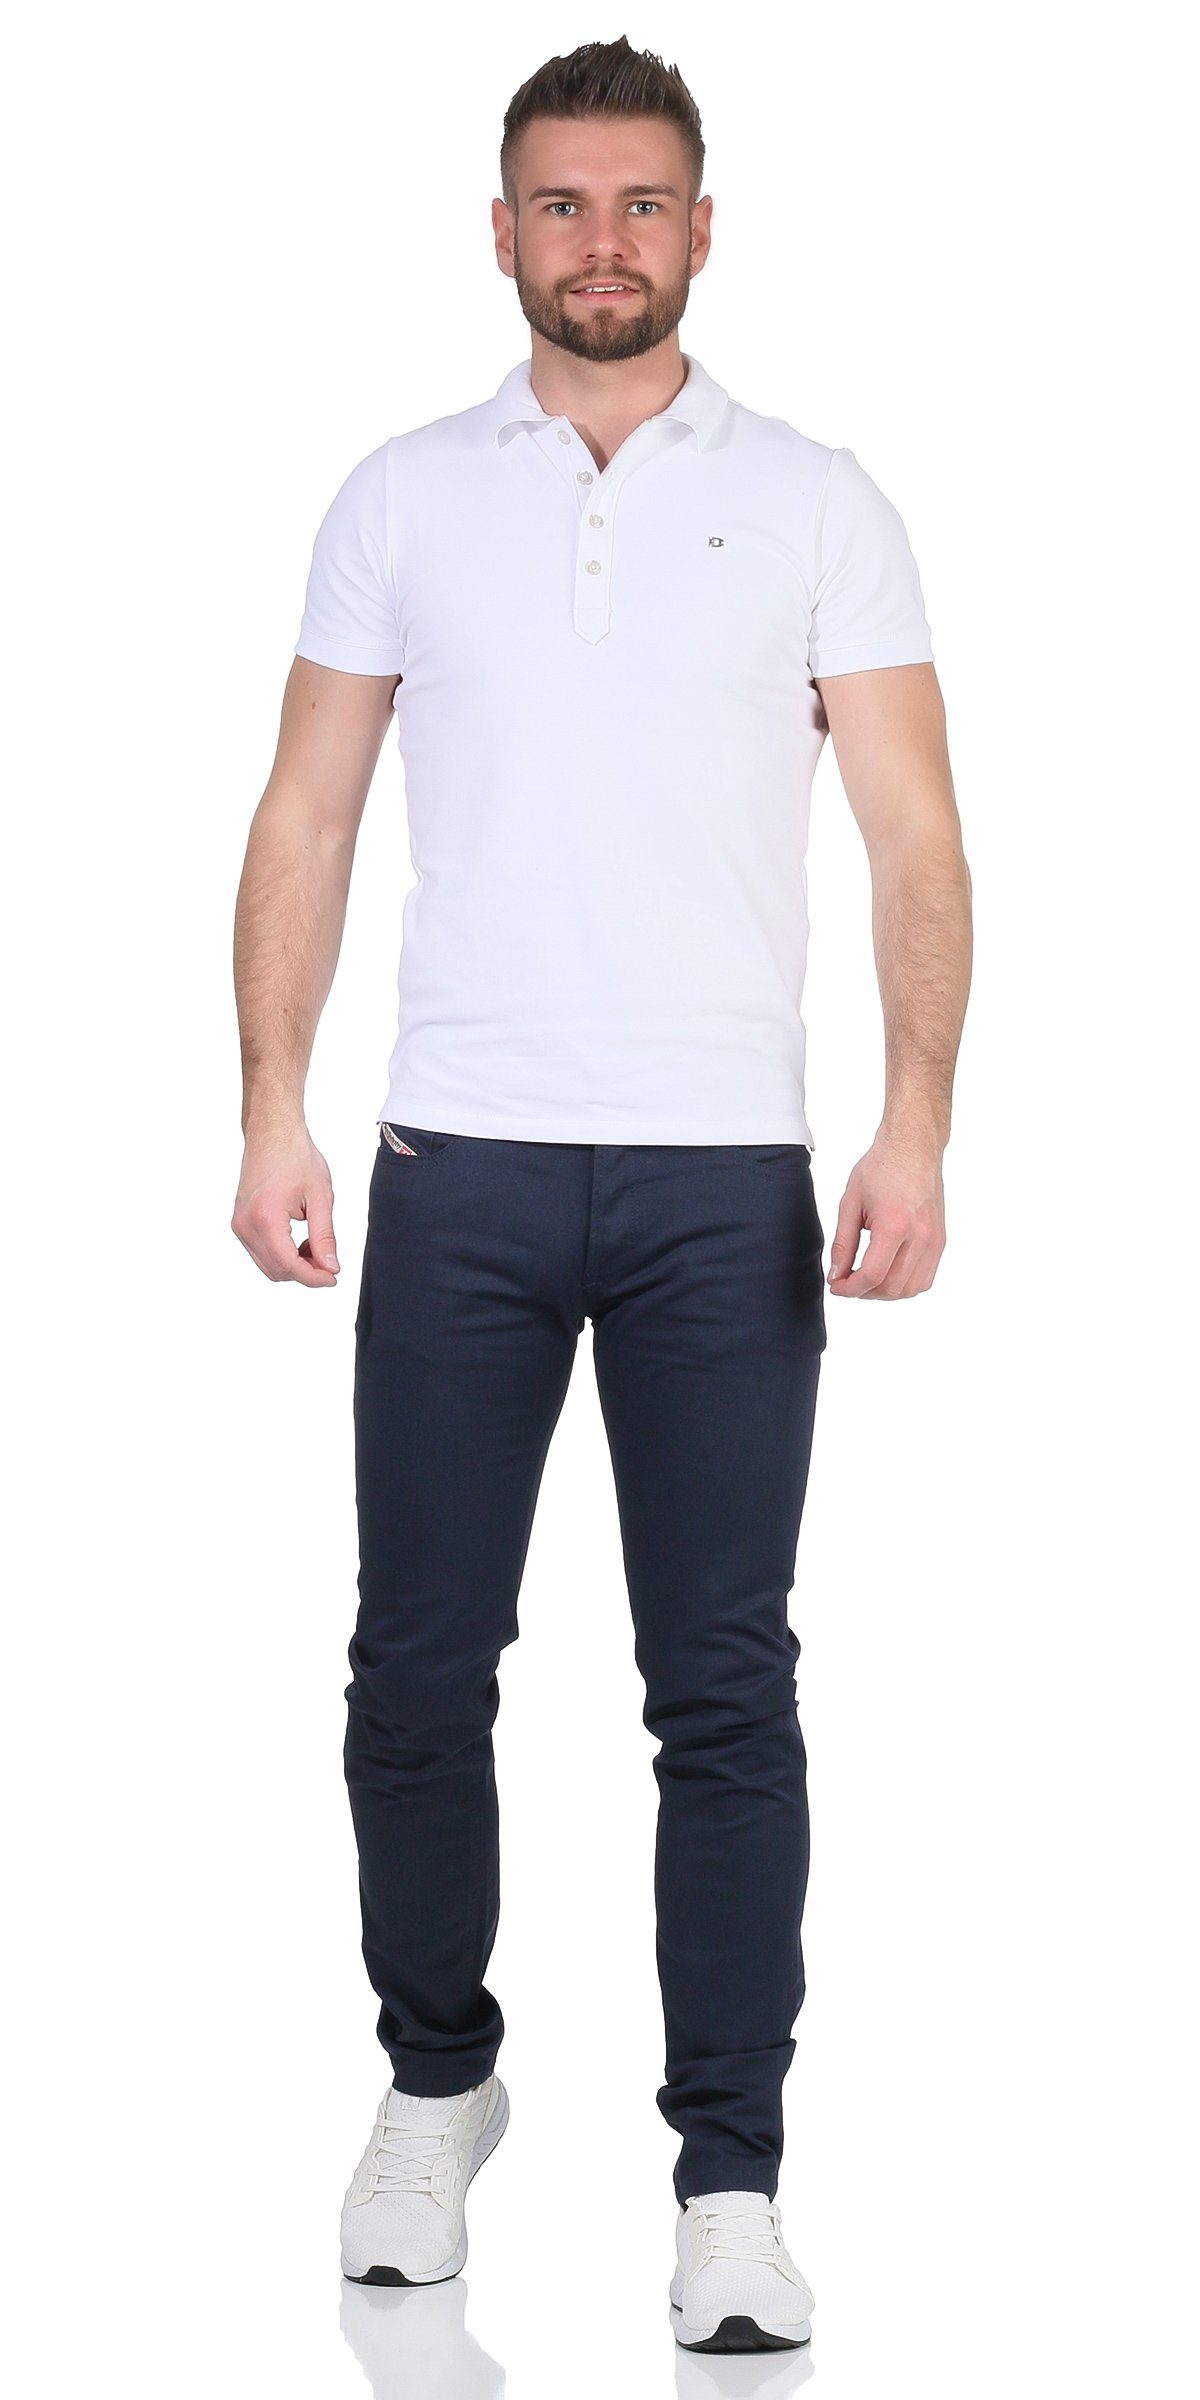 32 Diesel Hose, Diesel Skinny-fit-Jeans Länge: Herren inch Sommer, R-TROXER-A 5-Pocket-Style, Einheitsgröße Navy Skinny-fit-Jeans